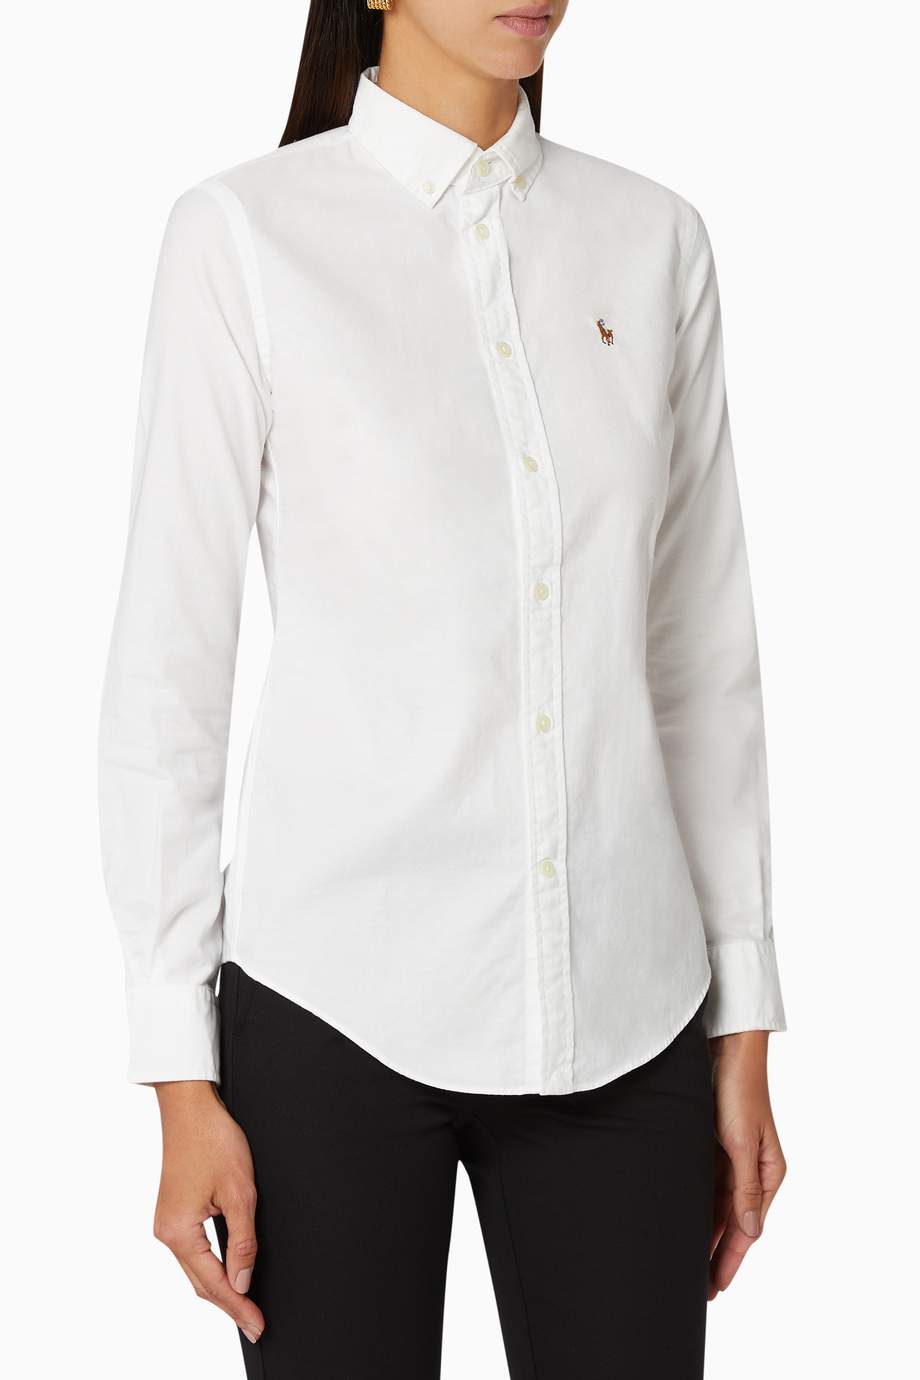 Shop Polo Ralph Lauren White Slim Fit Cotton Oxford Shirt for Women